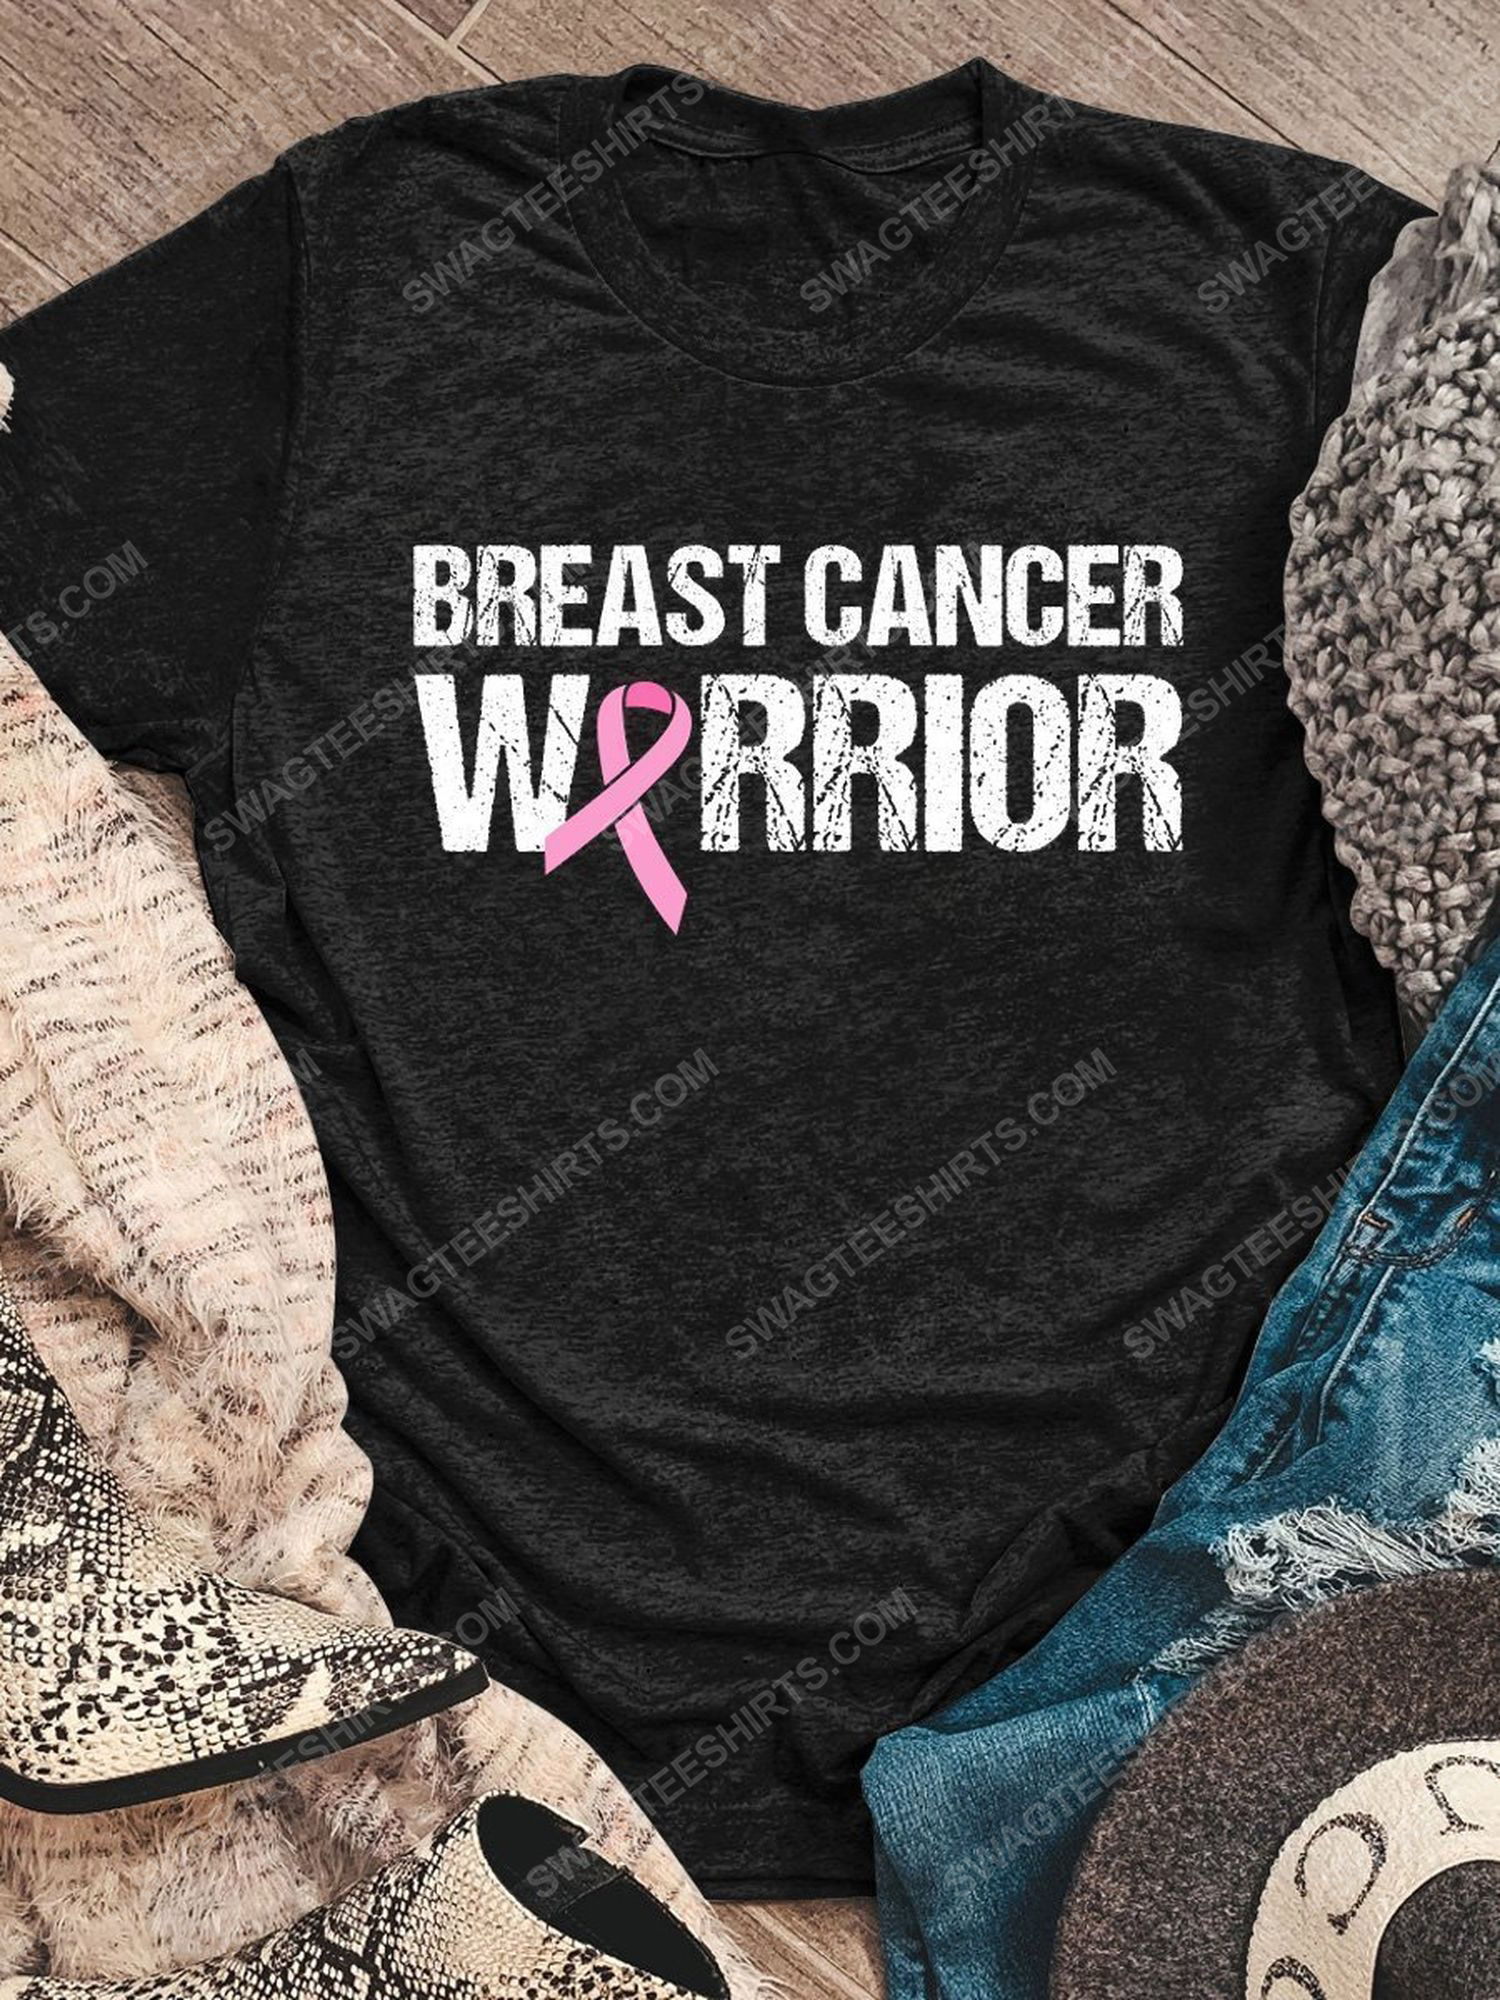 Breast cancer warrior breast cancer ribbon shirt 1 - Copy (2)